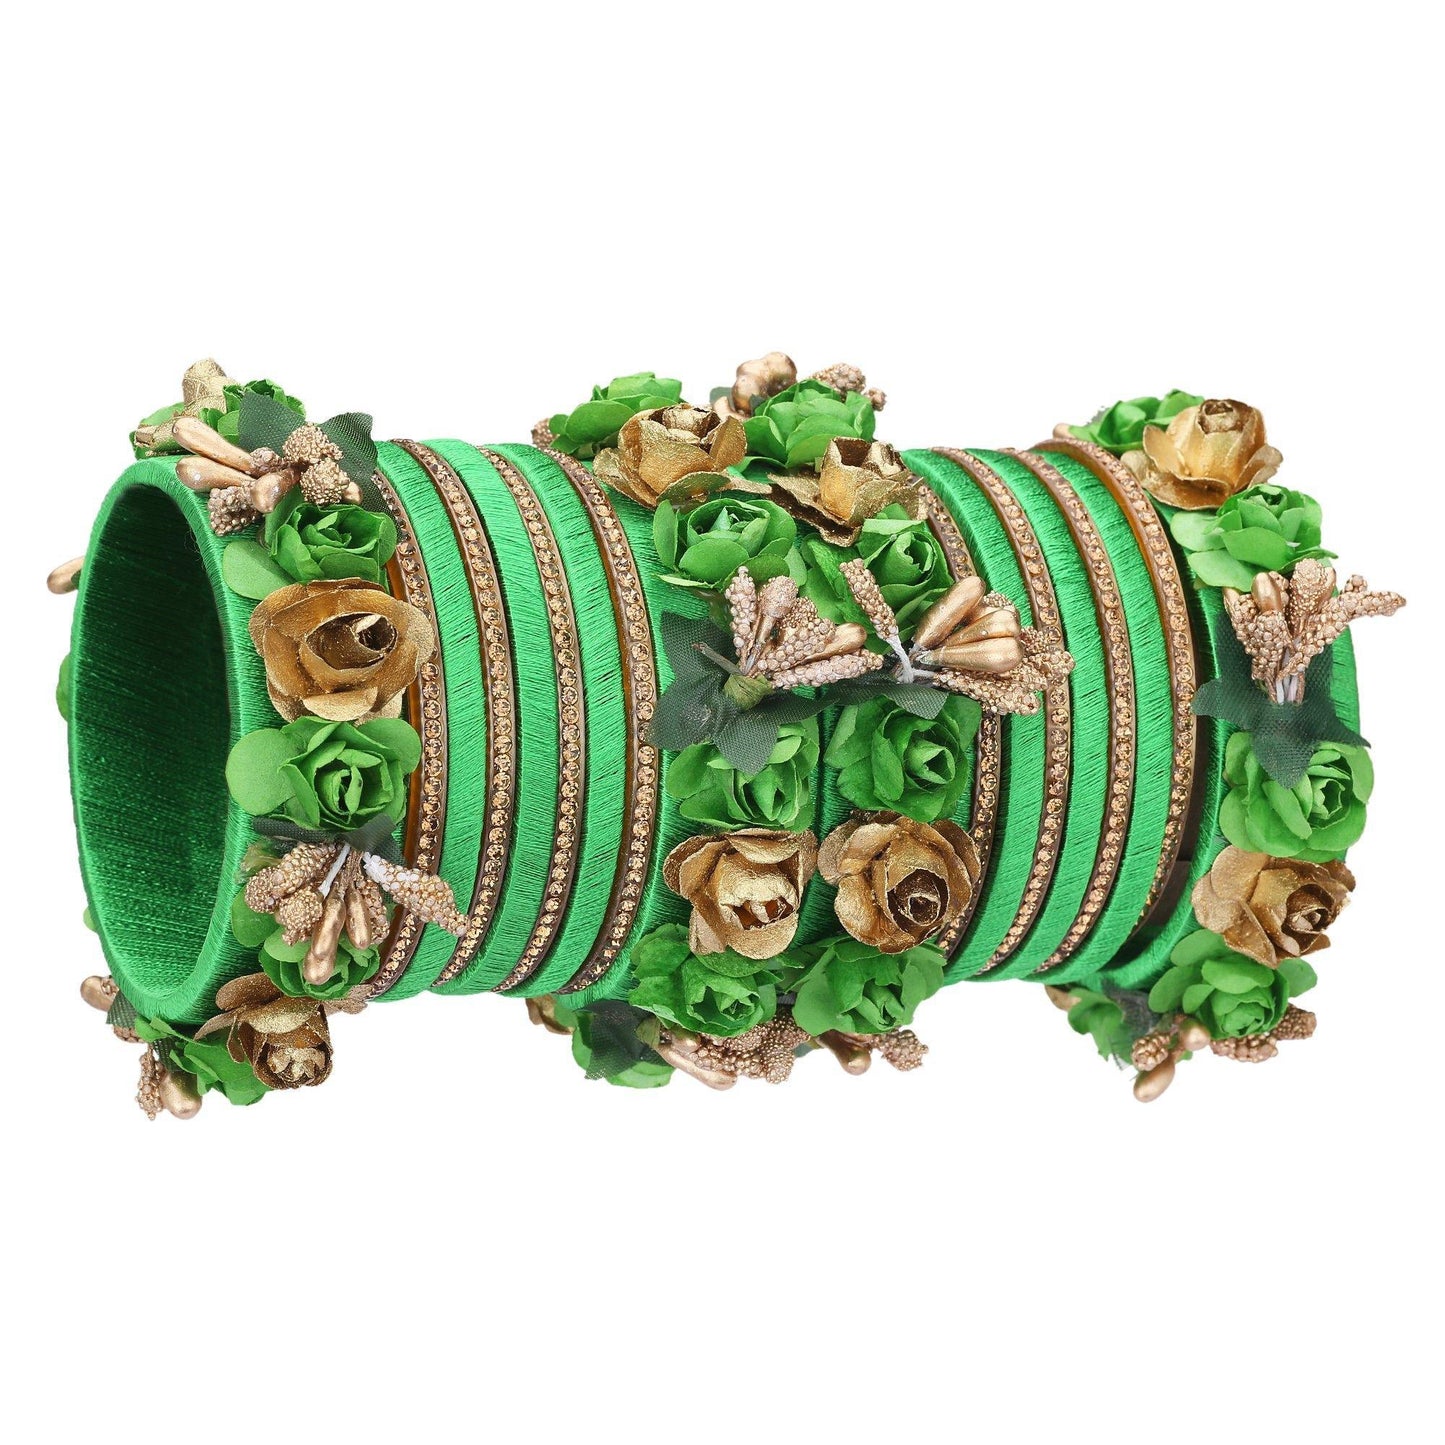 sukriti stylish designer party wedding wear flower silk thread green bangles for girls & women – set of 18